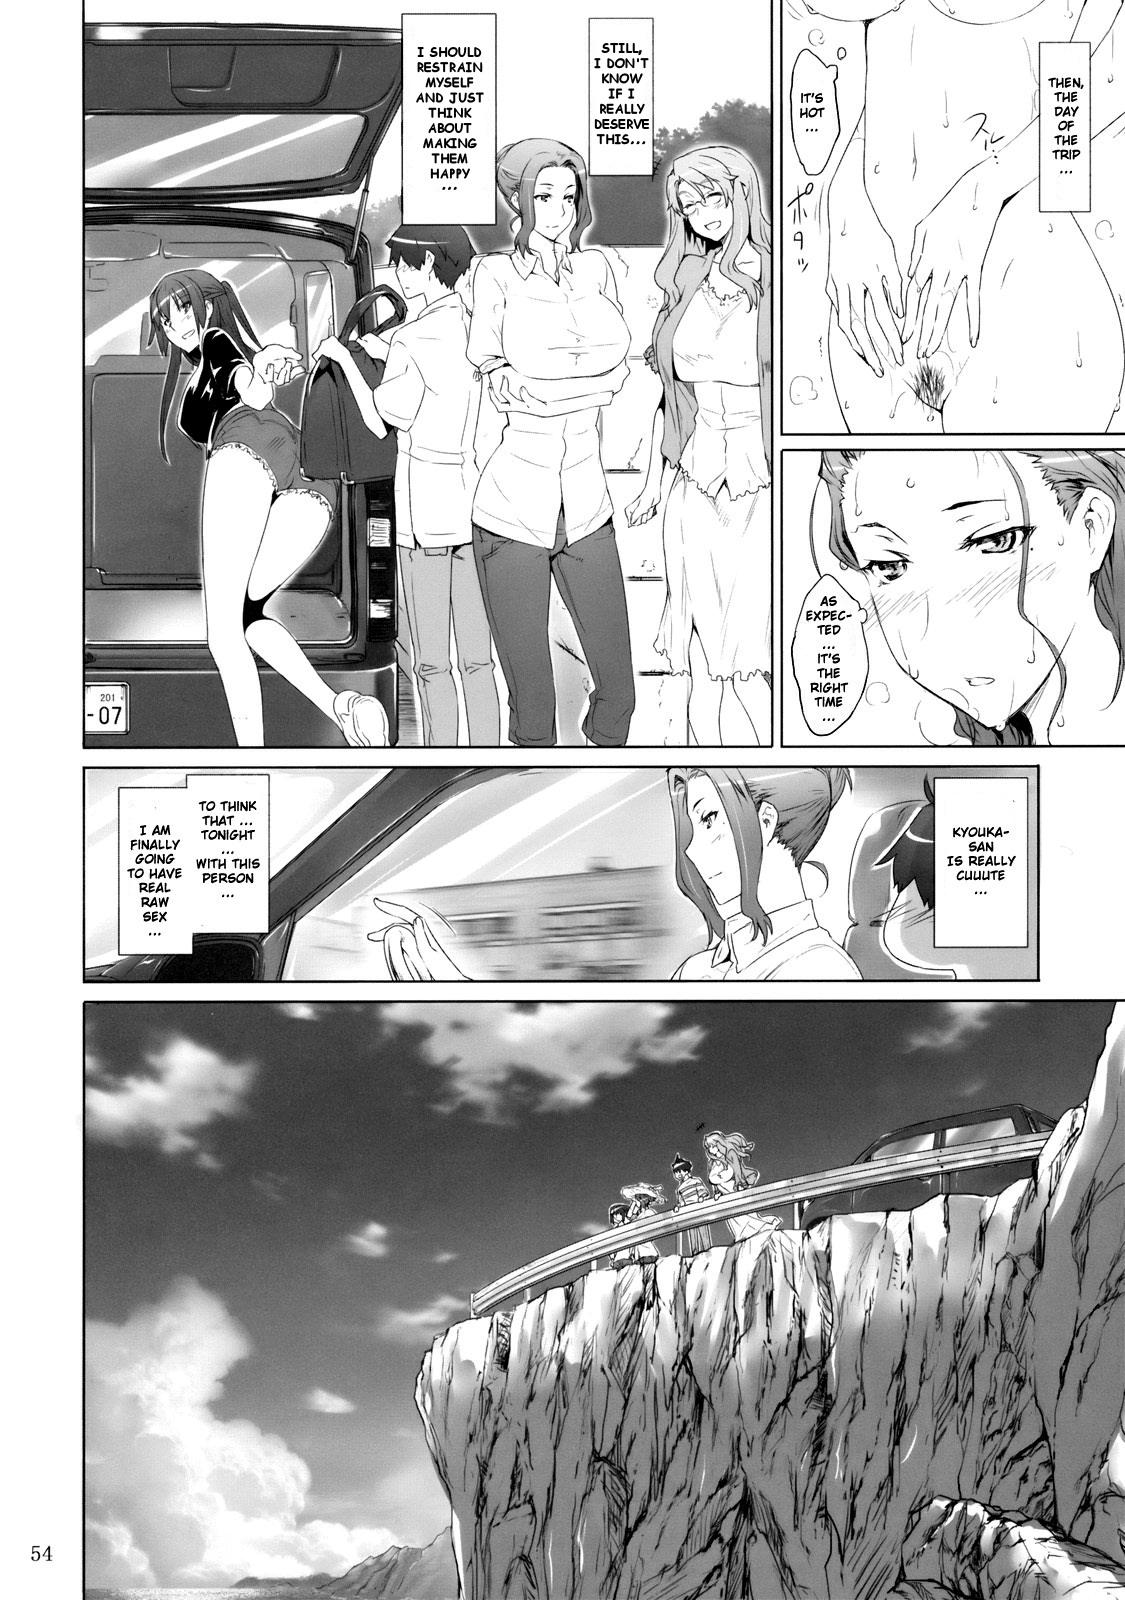 Butts Mtsp - Tachibana-san's Circumstabces WIth a Man 2 Deutsche - Page 3